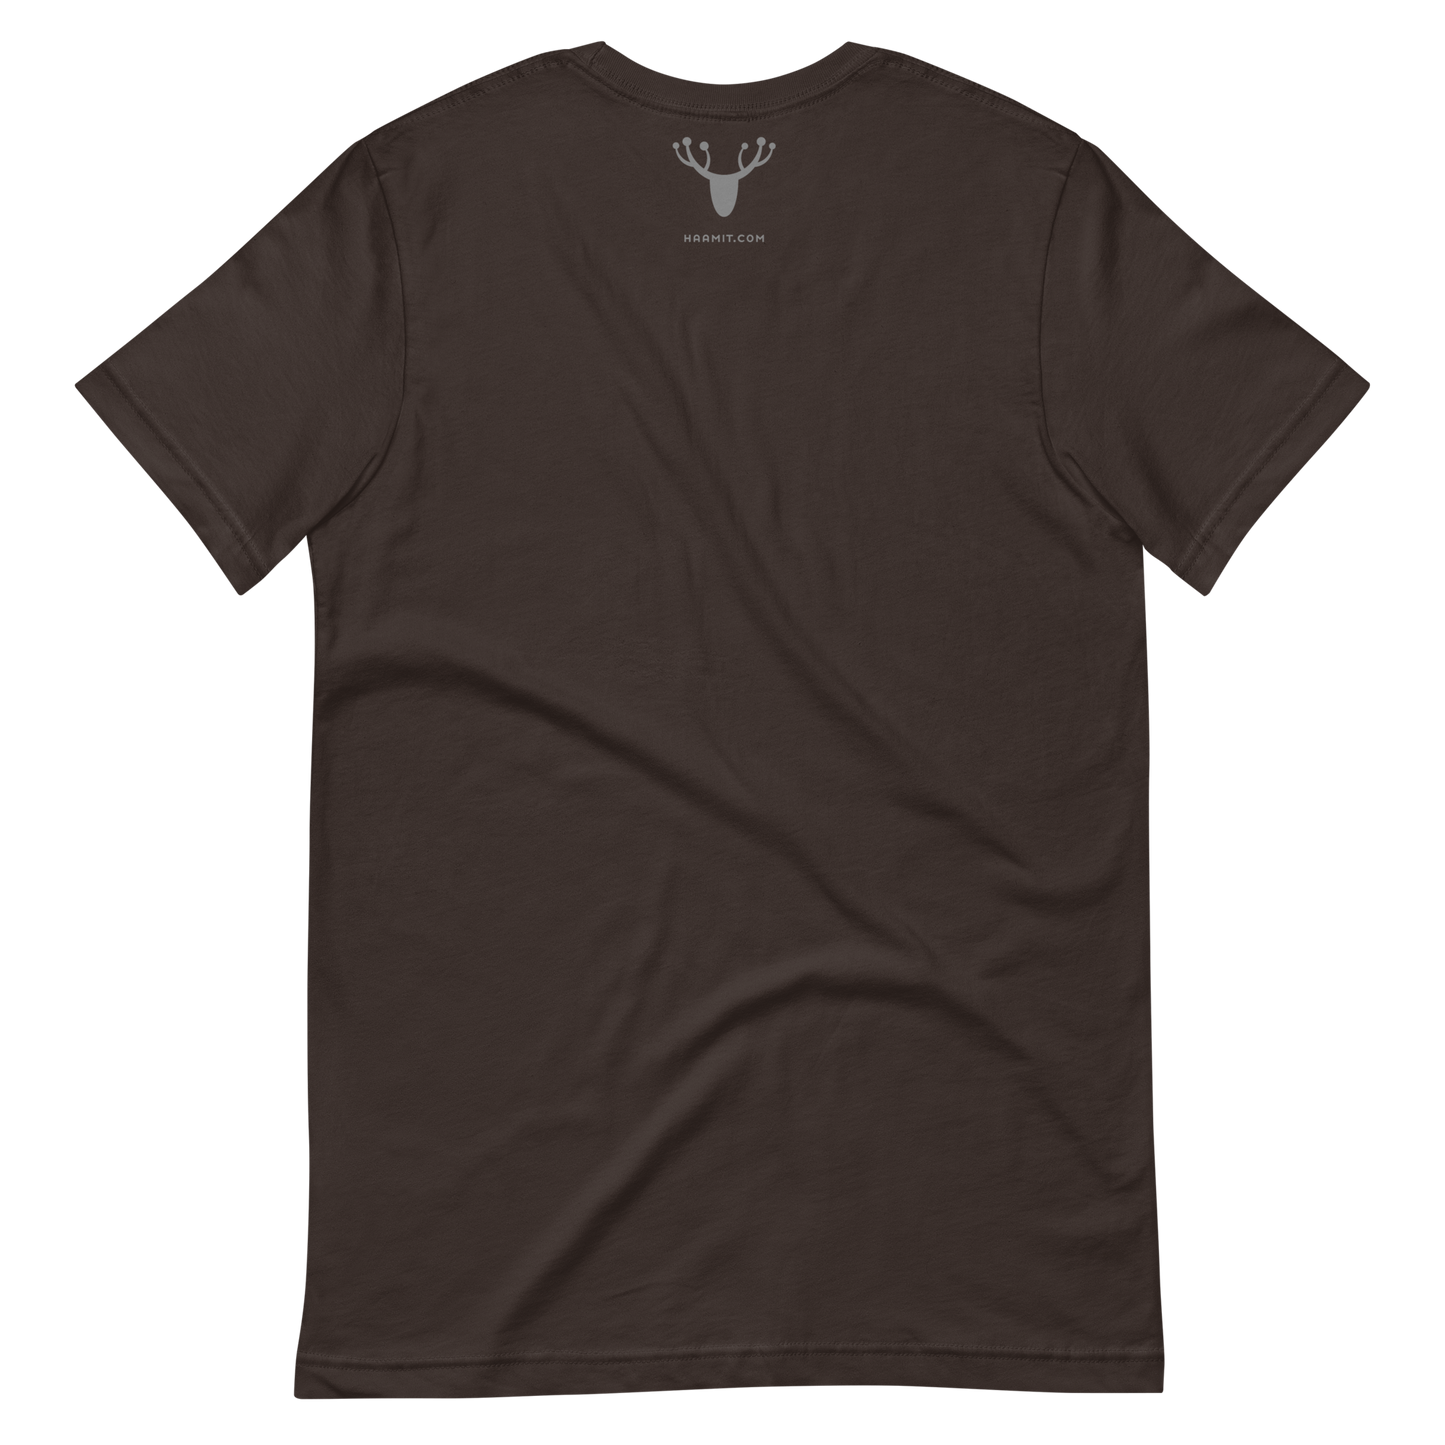 T-Shirt Mission Impossible, magisches Dreieck 3